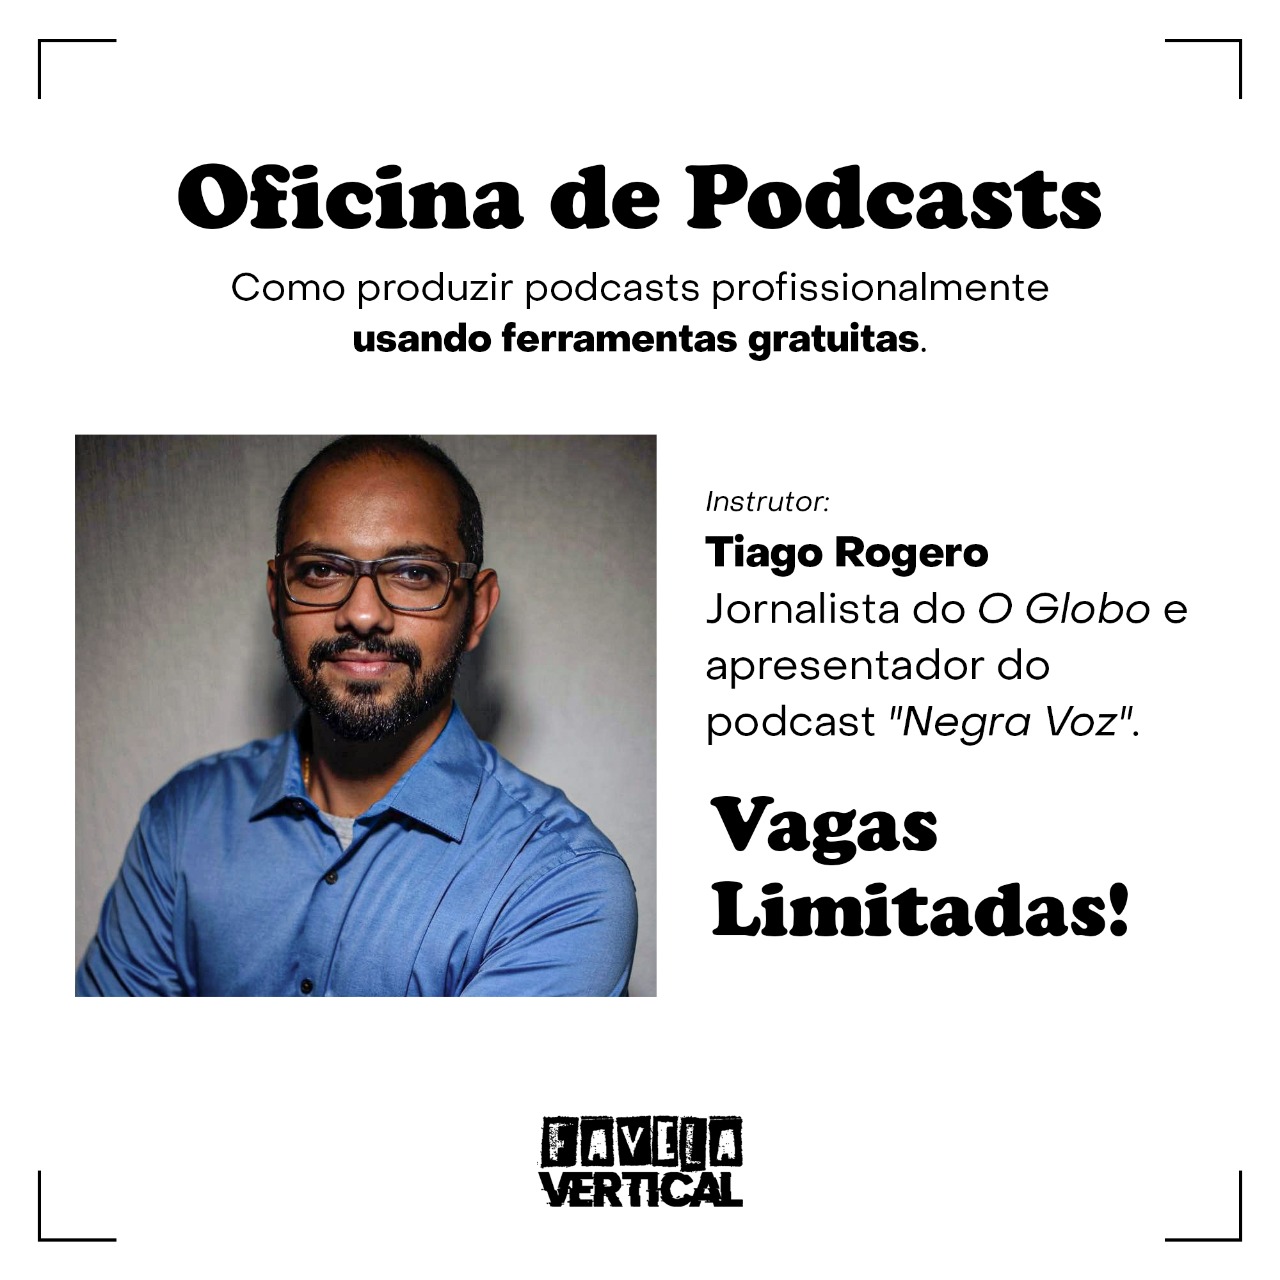 Favela Vertical realiza oficina de podcast com Tiago Rogero